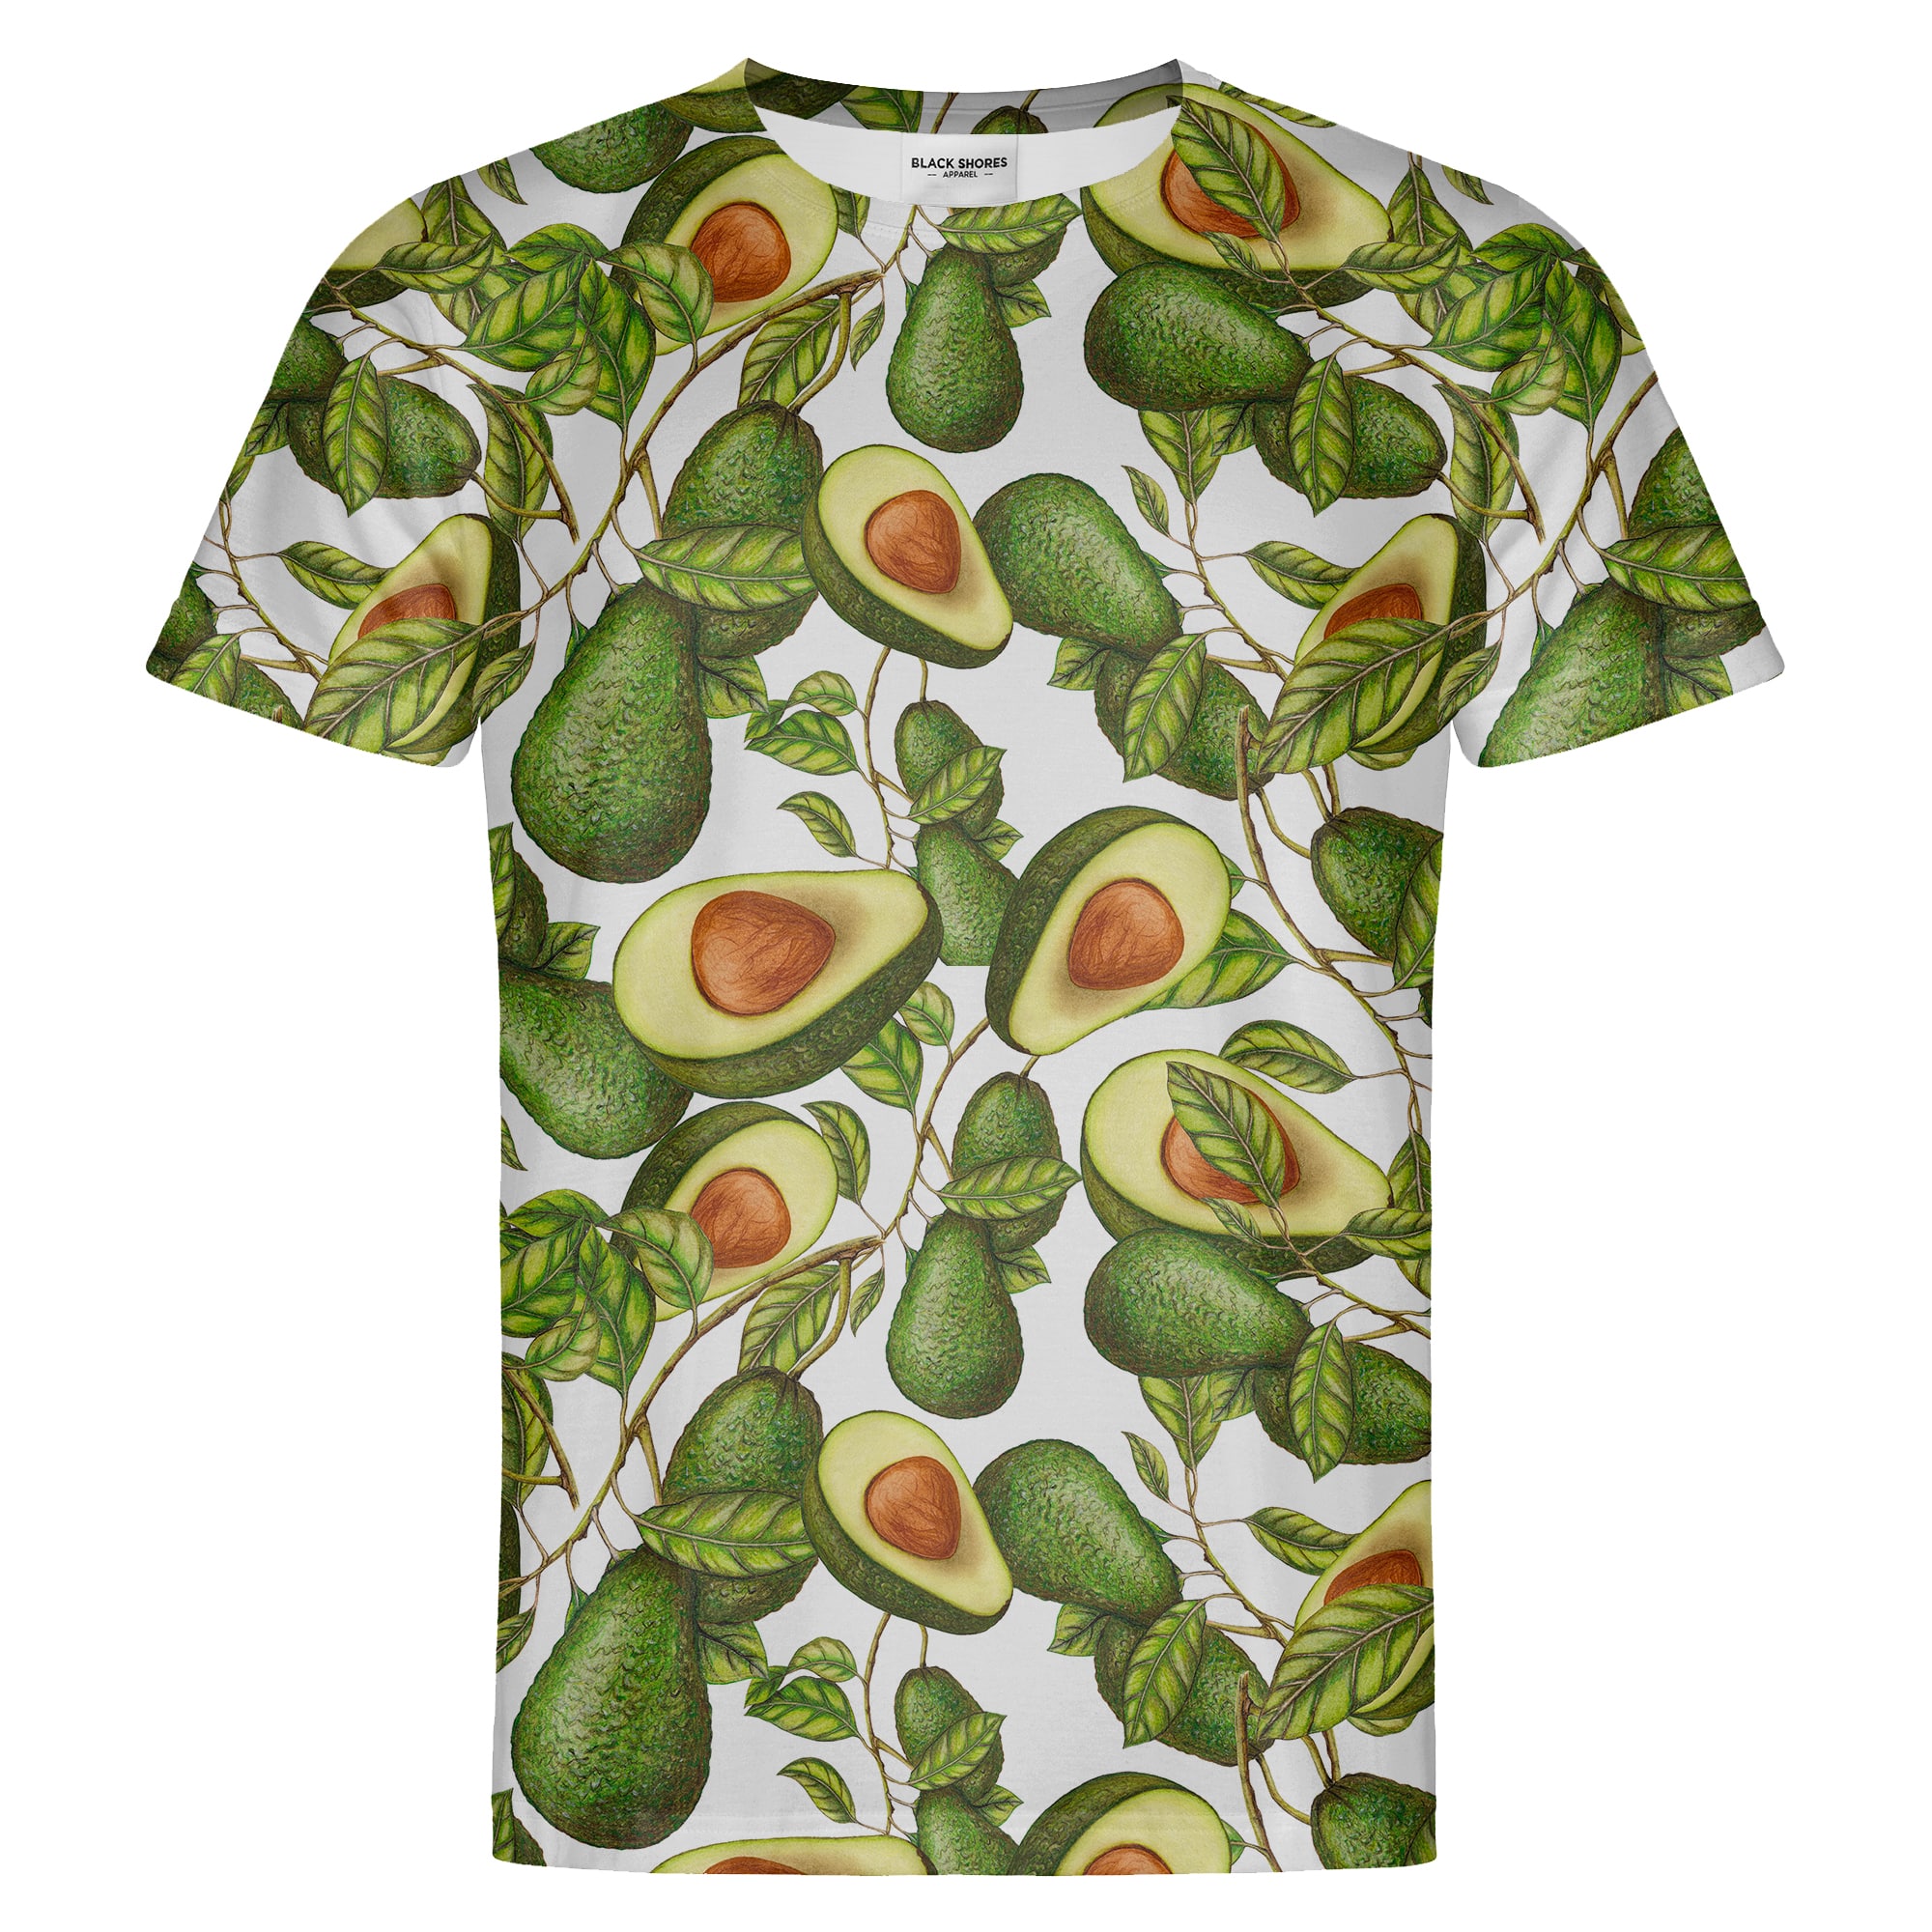 Avocado T-shirt – Black Shores - XS